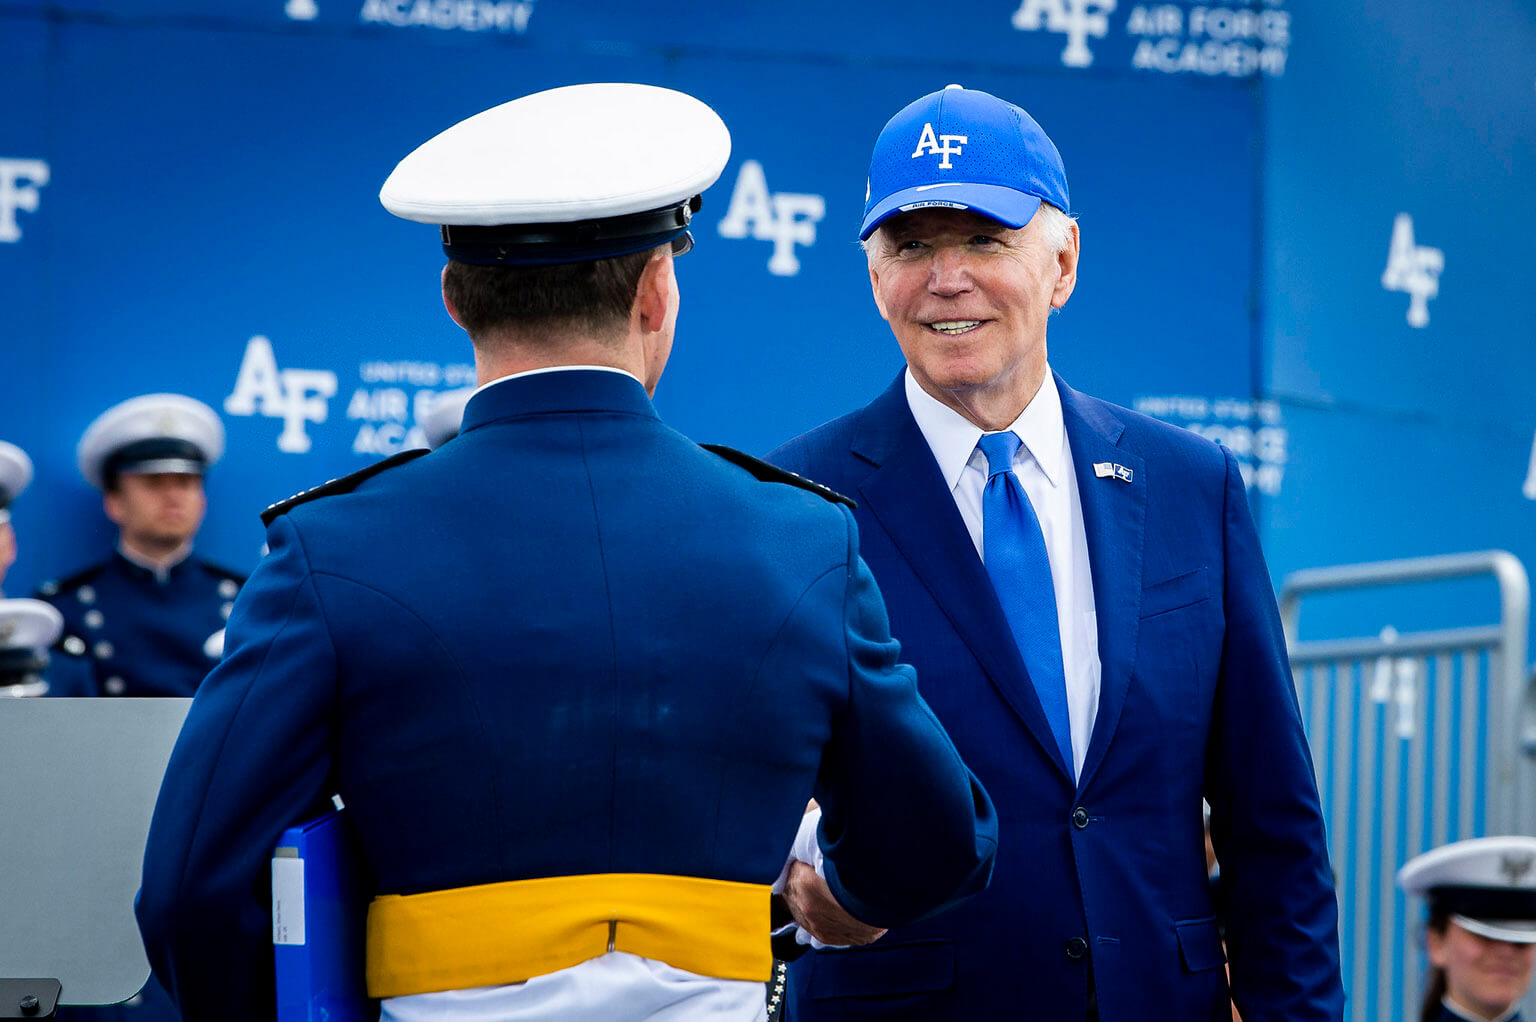 President Biden shaking hands with graduating cadet